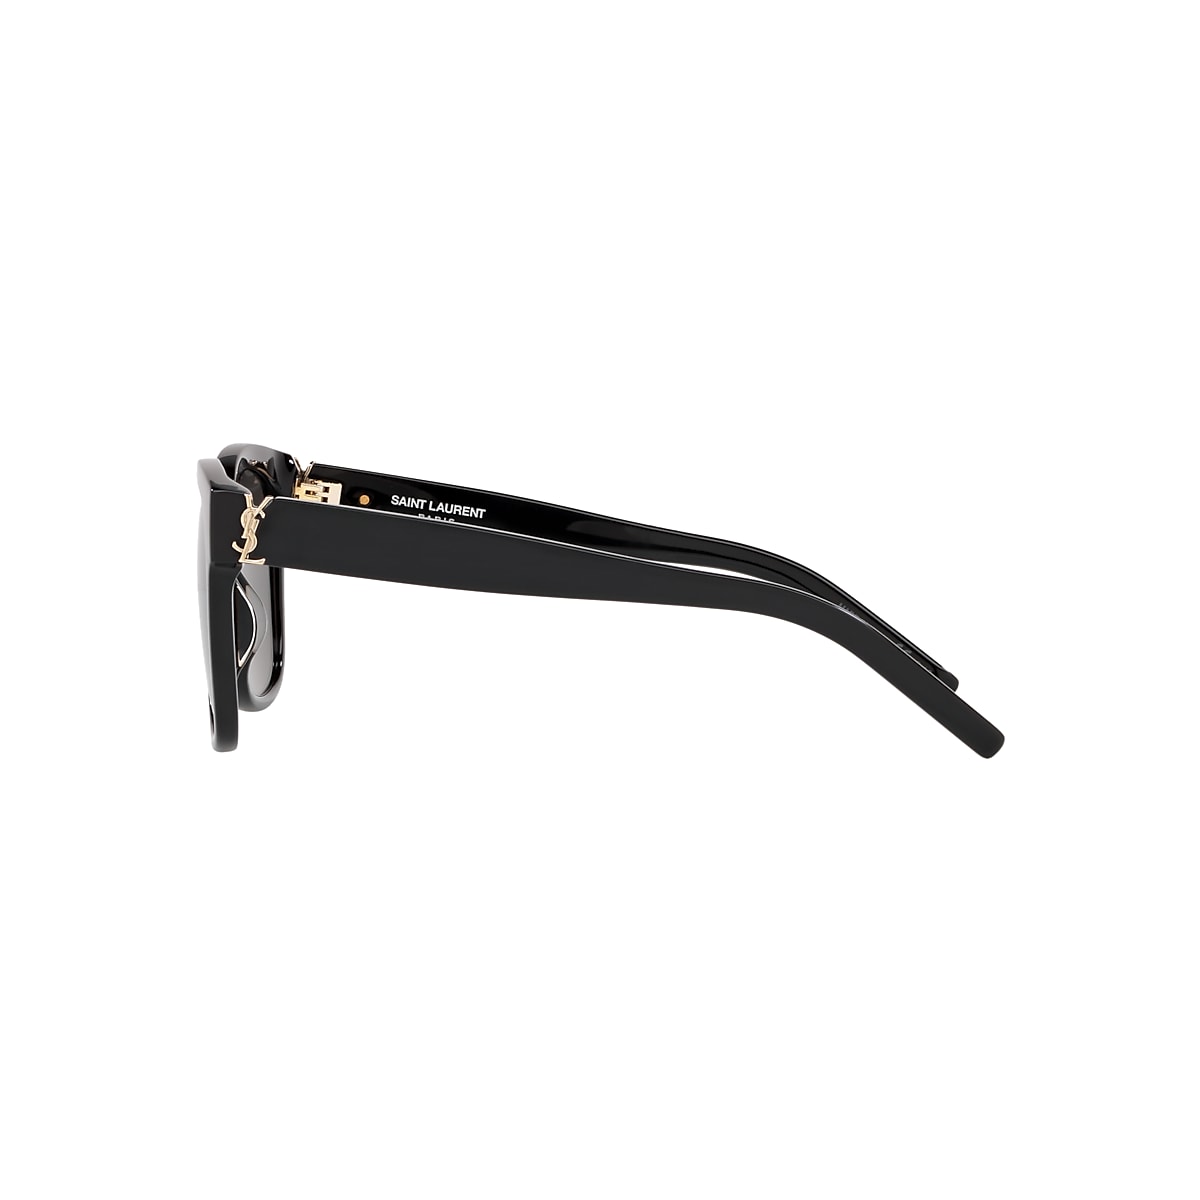 SAINT LAURENT SL M40 Black Shiny - Woman Sunglasses, Grey Lens